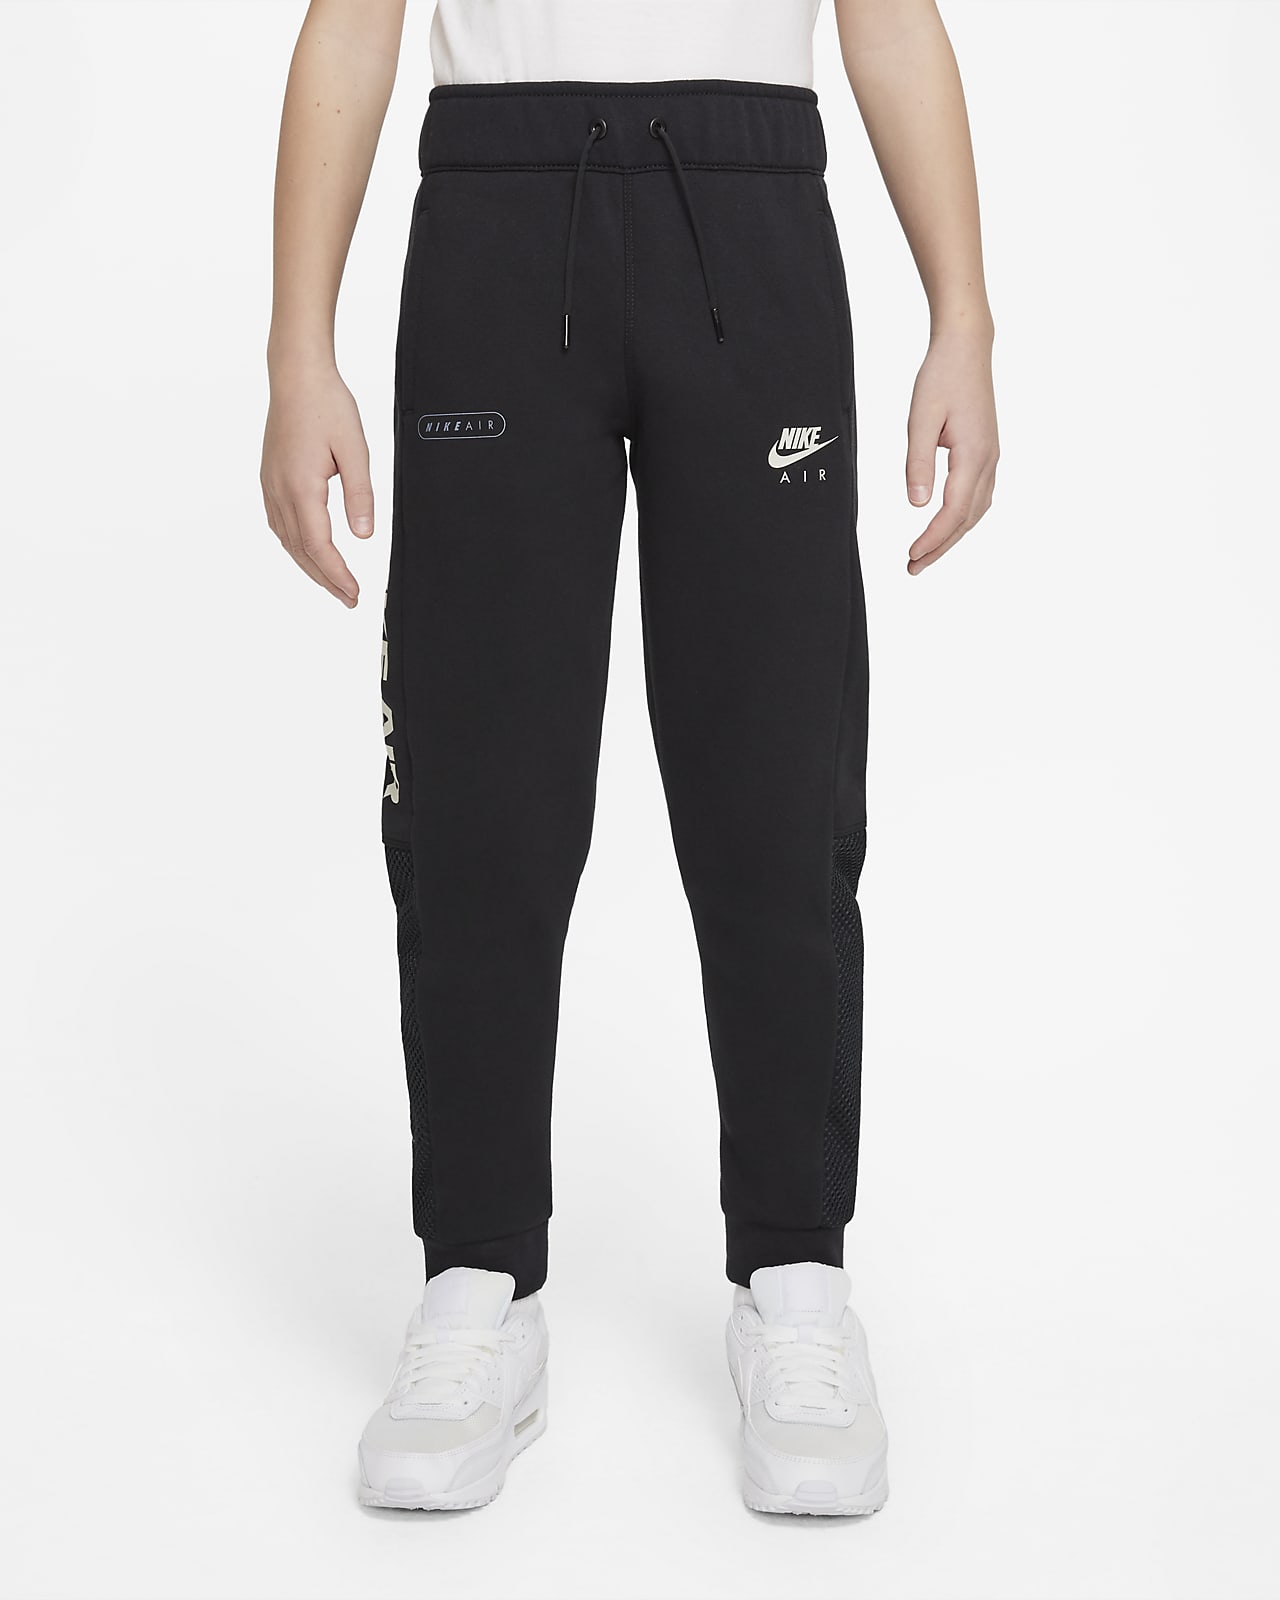 Nike Air Pantalons - Nen